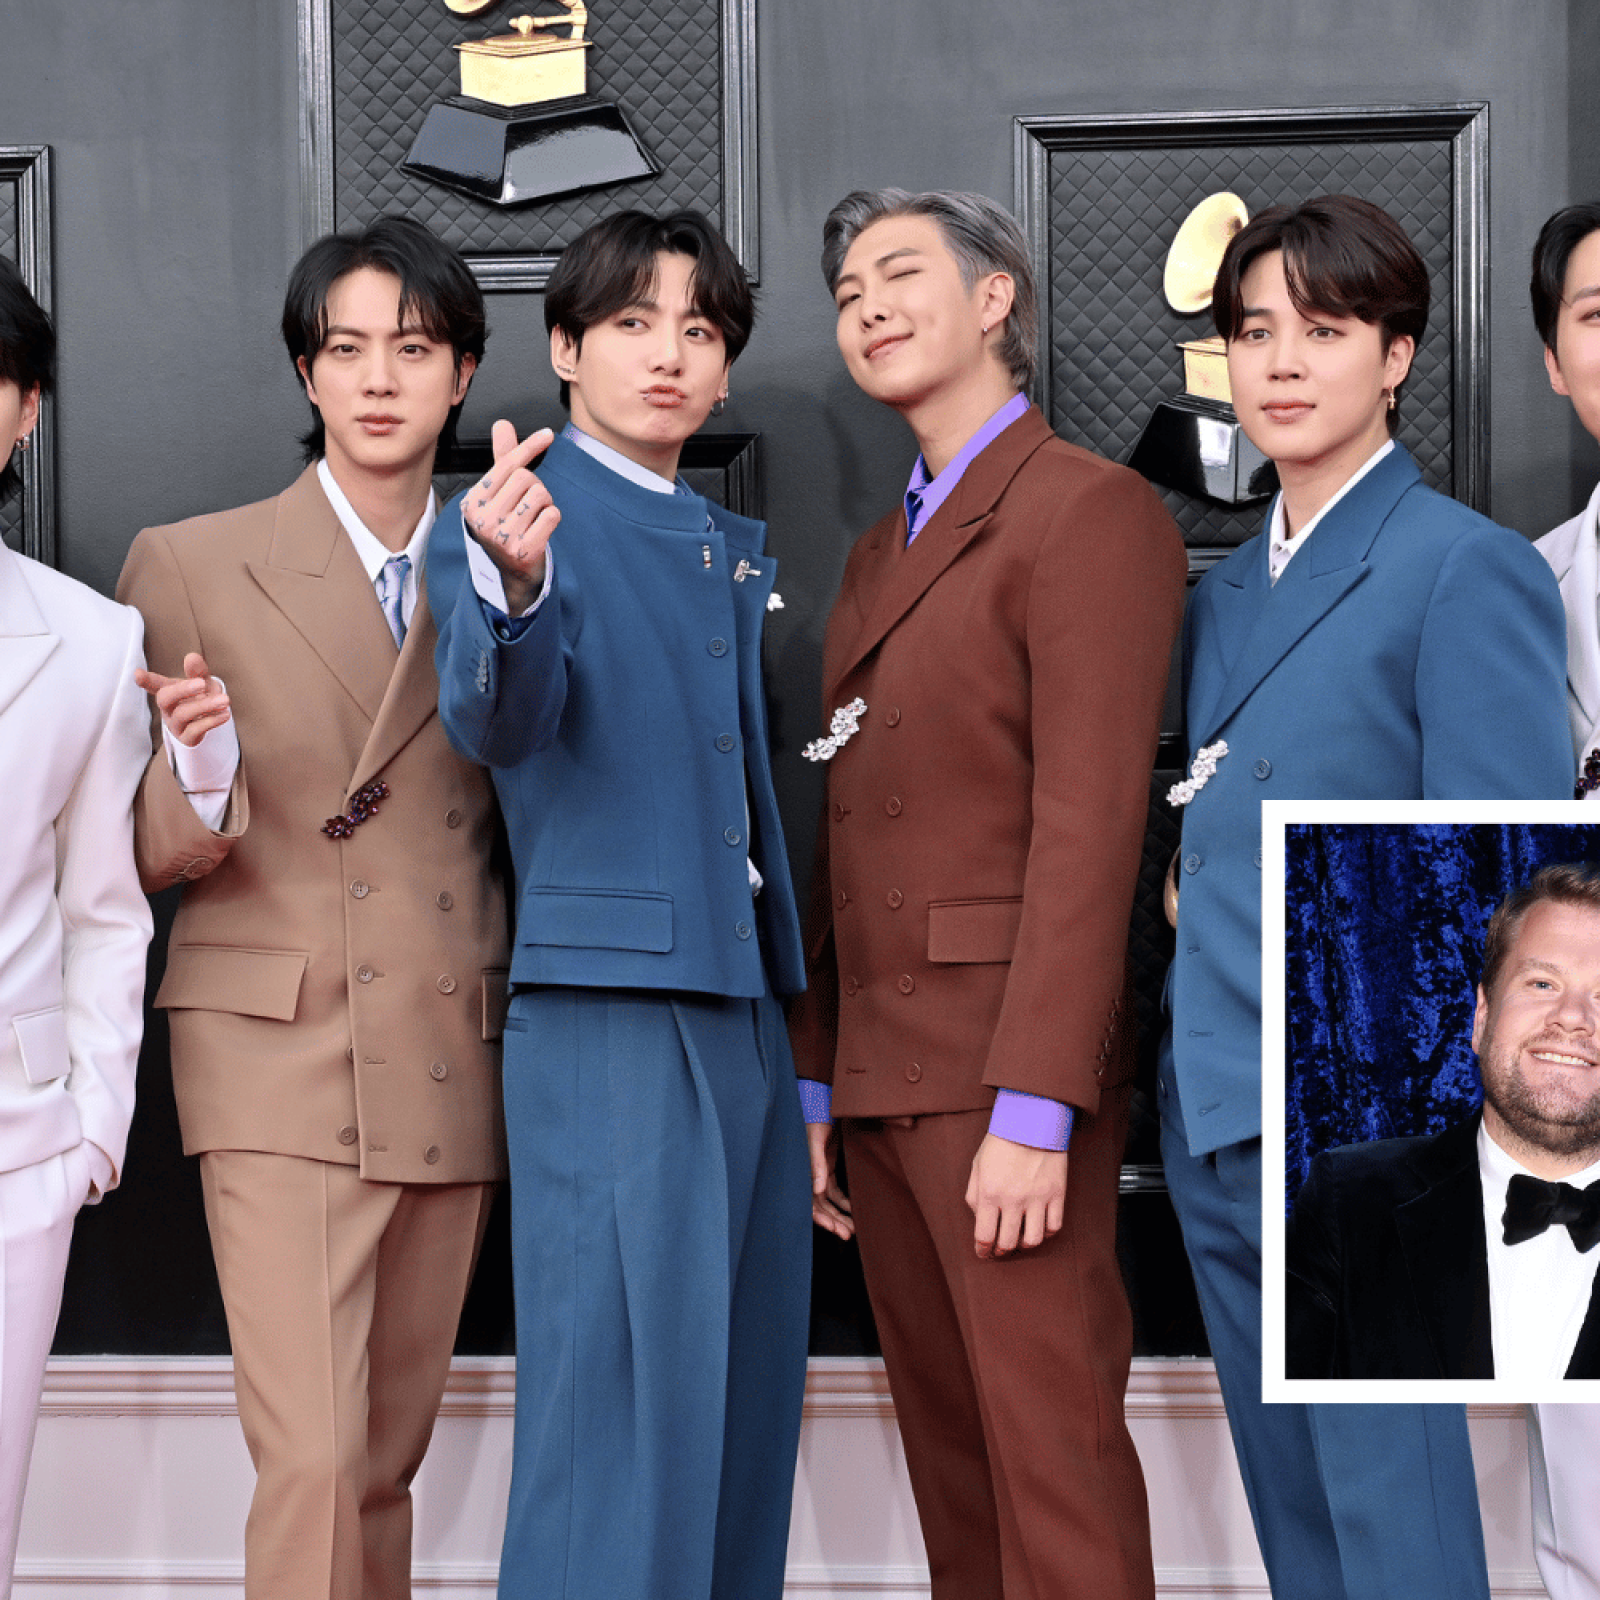 Showbiz: BTS' Jungkook moved to tears at recent Grammys 2019